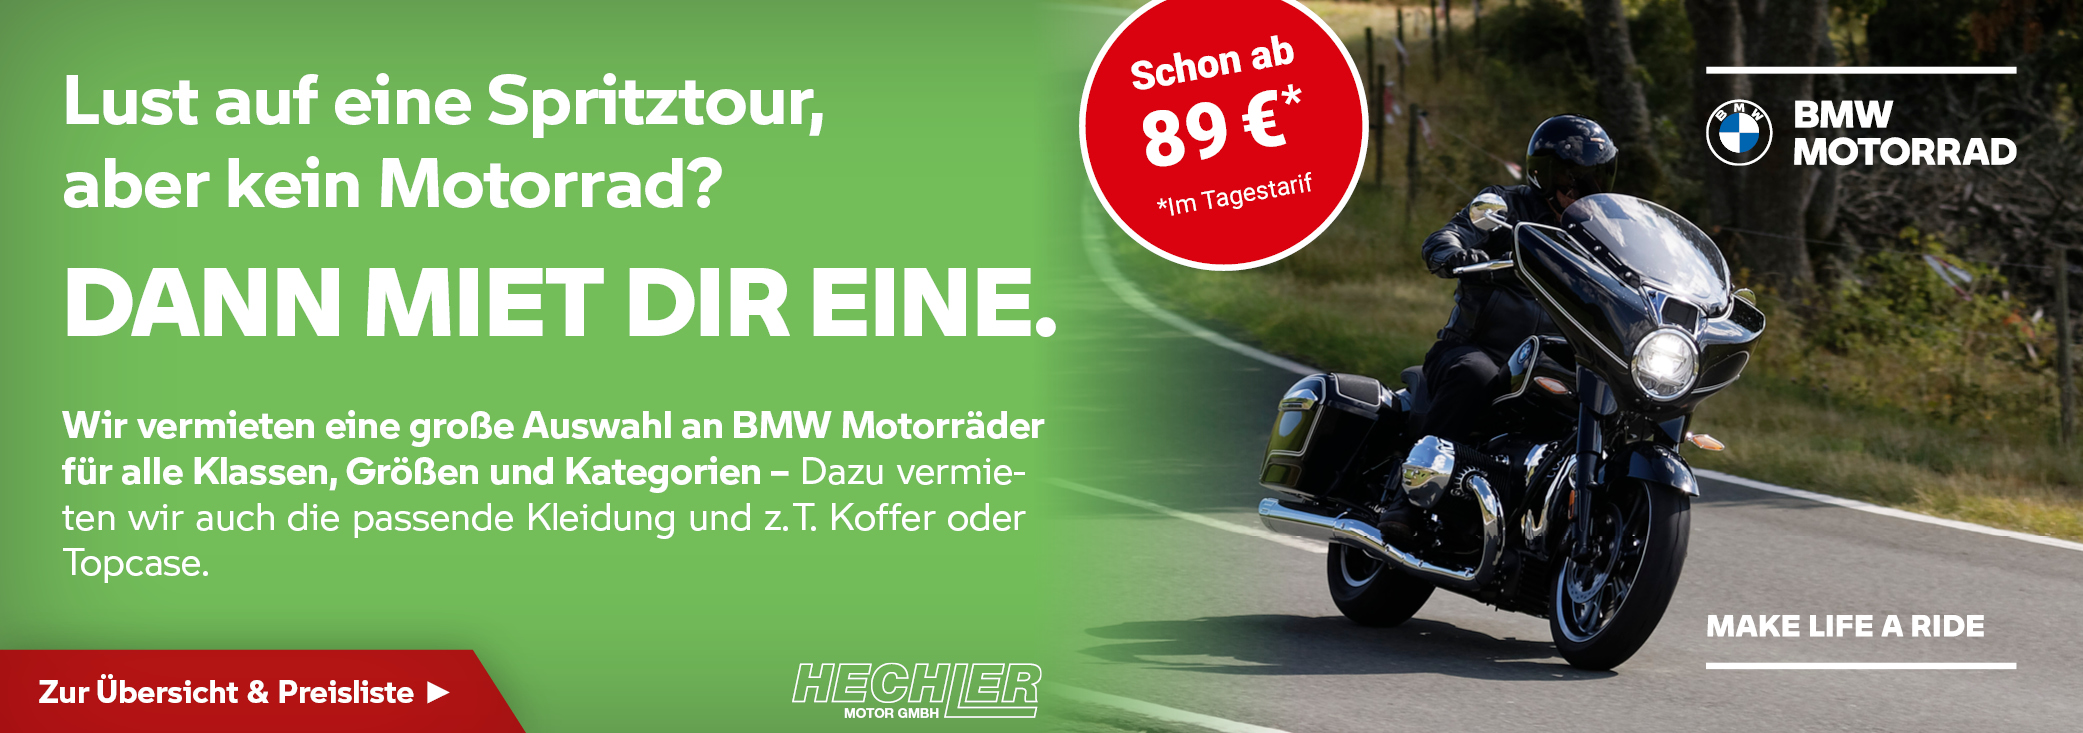 Hechler - BMW Mietfahrzeuge